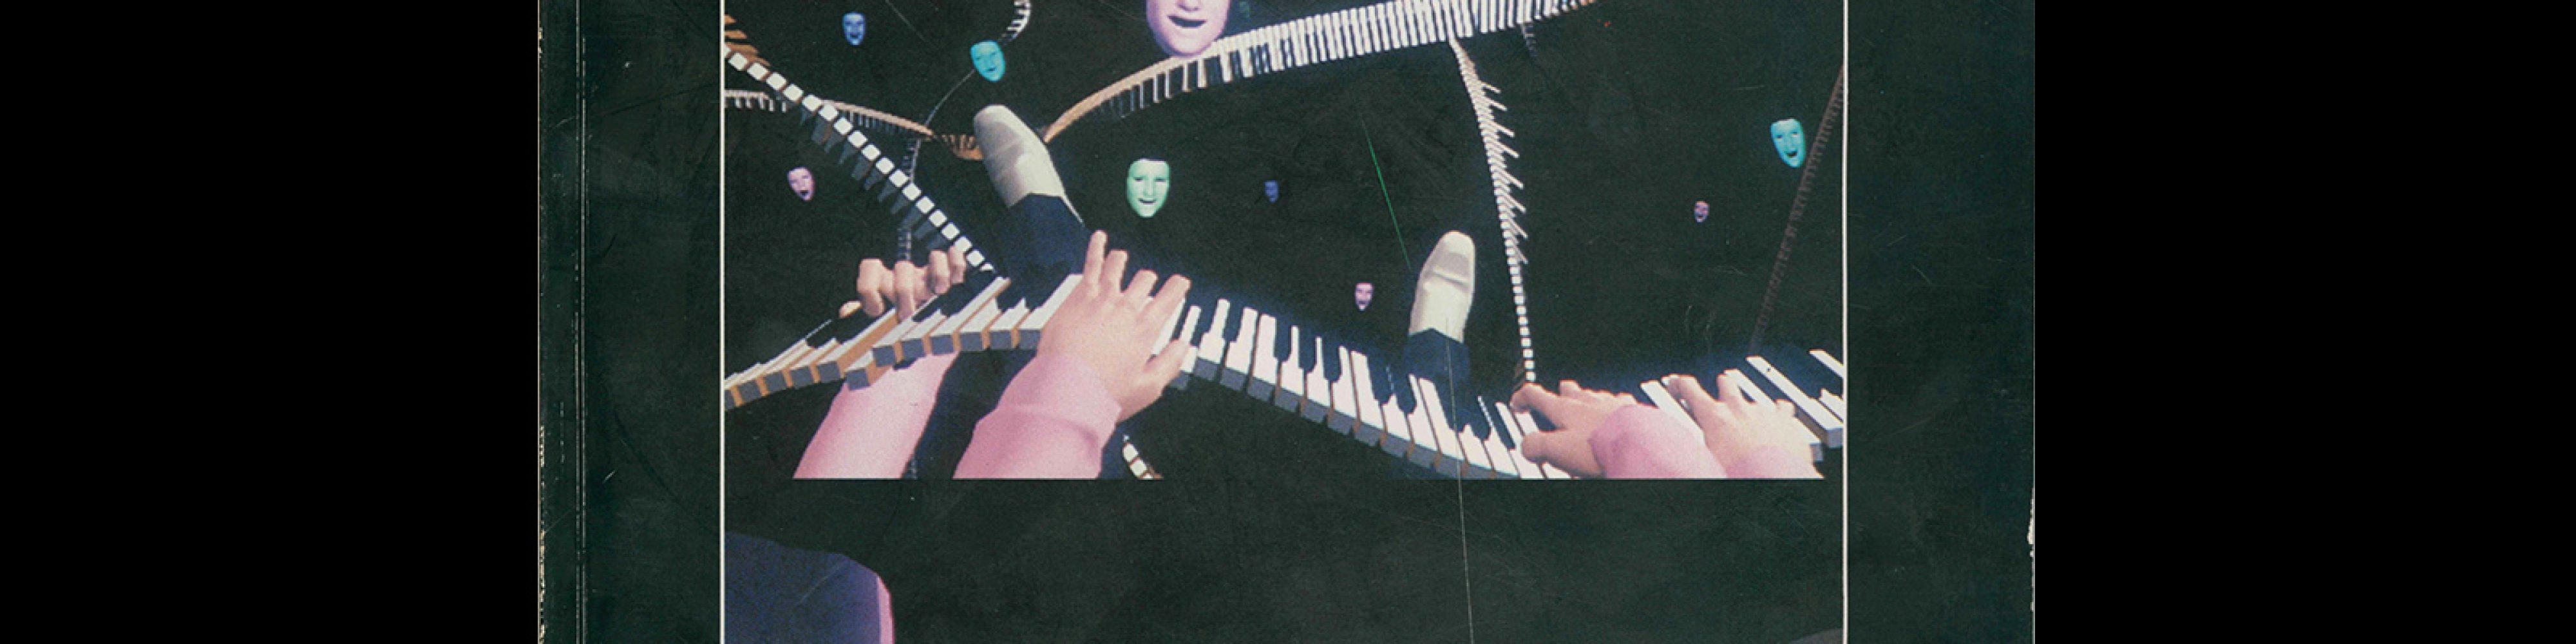 Idea 198, 1986-9. Cover design by Toshifumi Kawahara, Pierre Lachapelle, Philippe Bergeron, Pierre Robidoux, Daniel Langlois